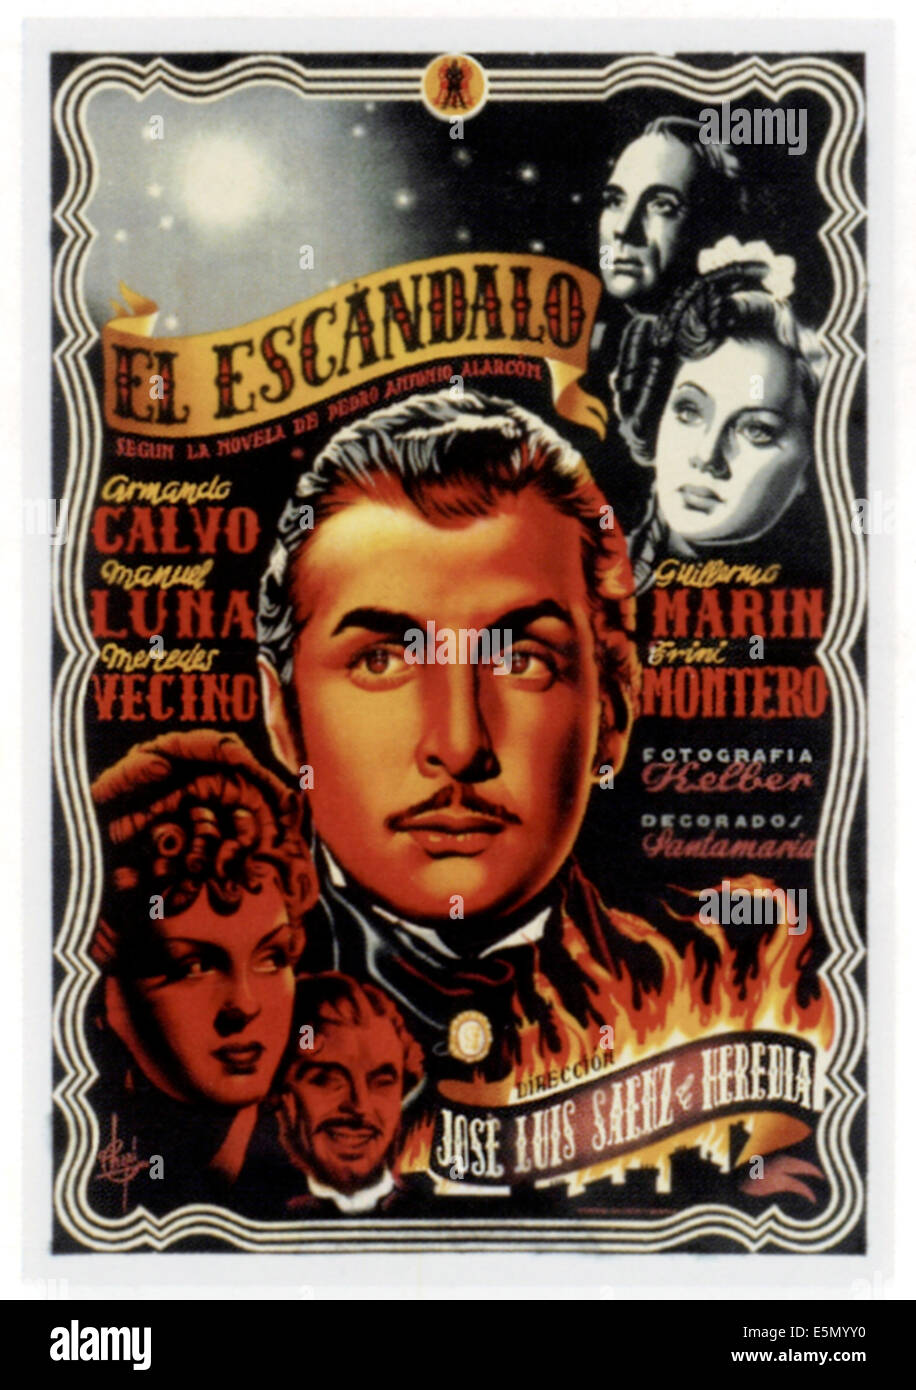 EL ESCANDALO, Spanish poster art, 1943. Stock Photo